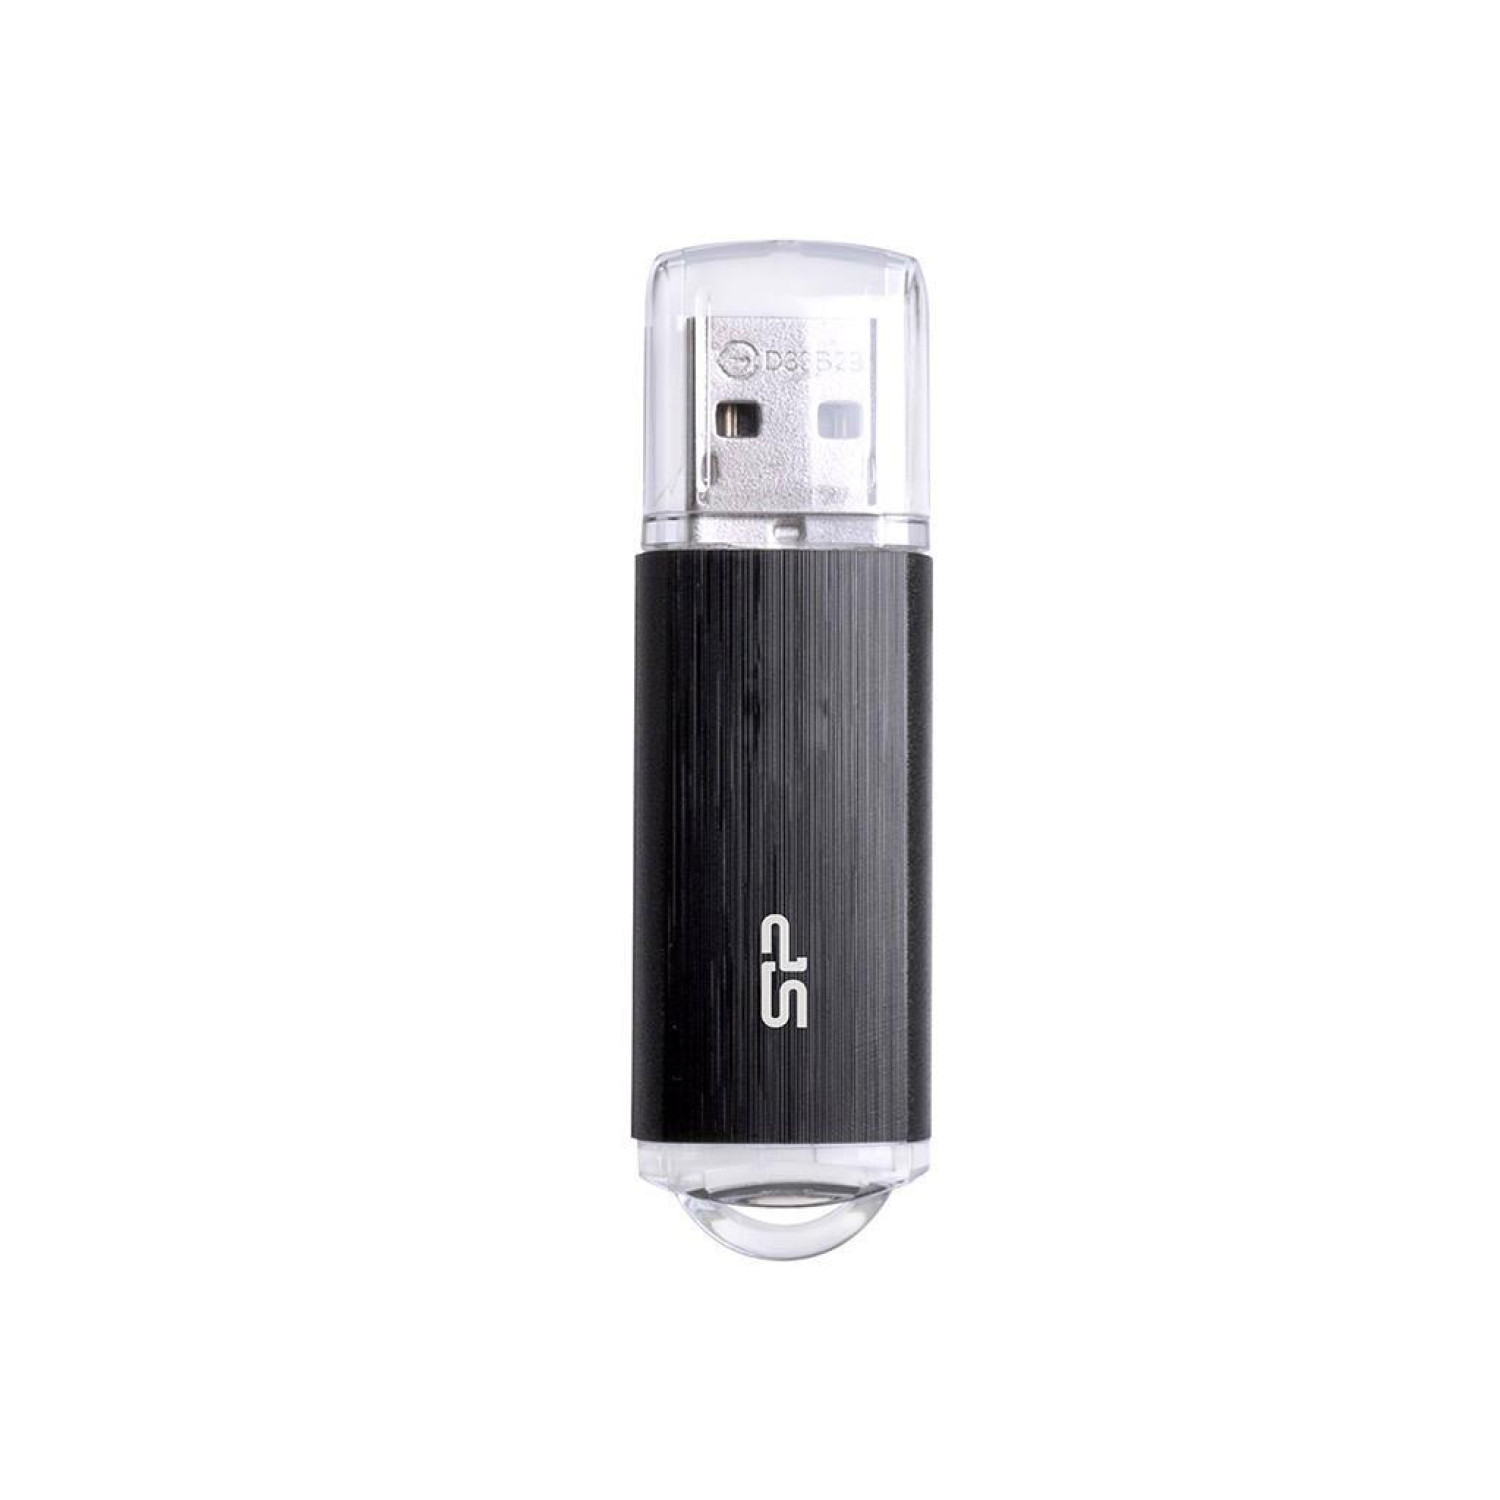 USB памет SILICON POWER Ultima U02, 4GB, USB 2.0 Черен